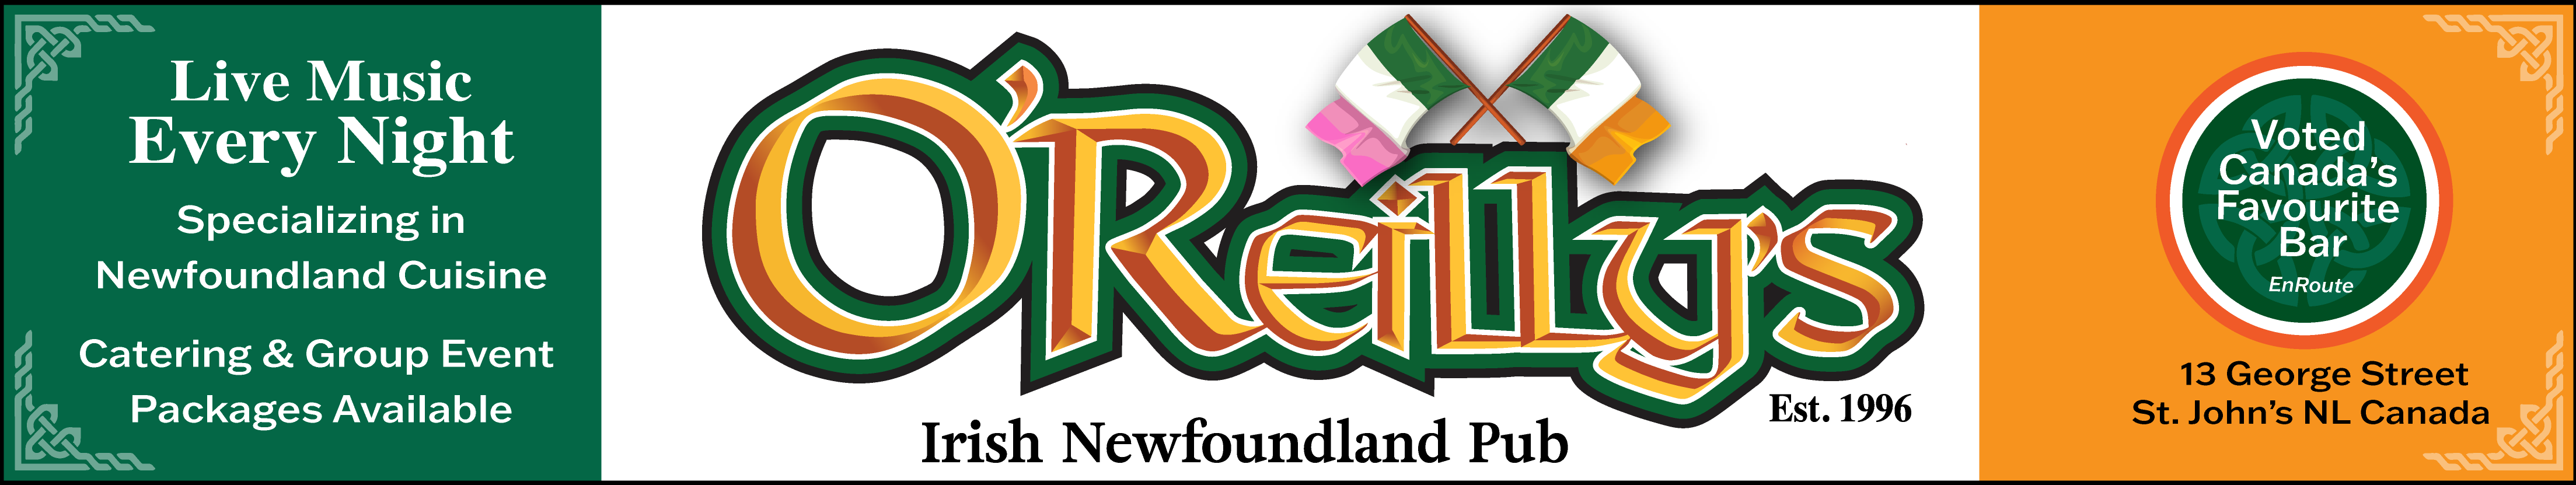 O'Reilly's Irish Newfoundland Pub